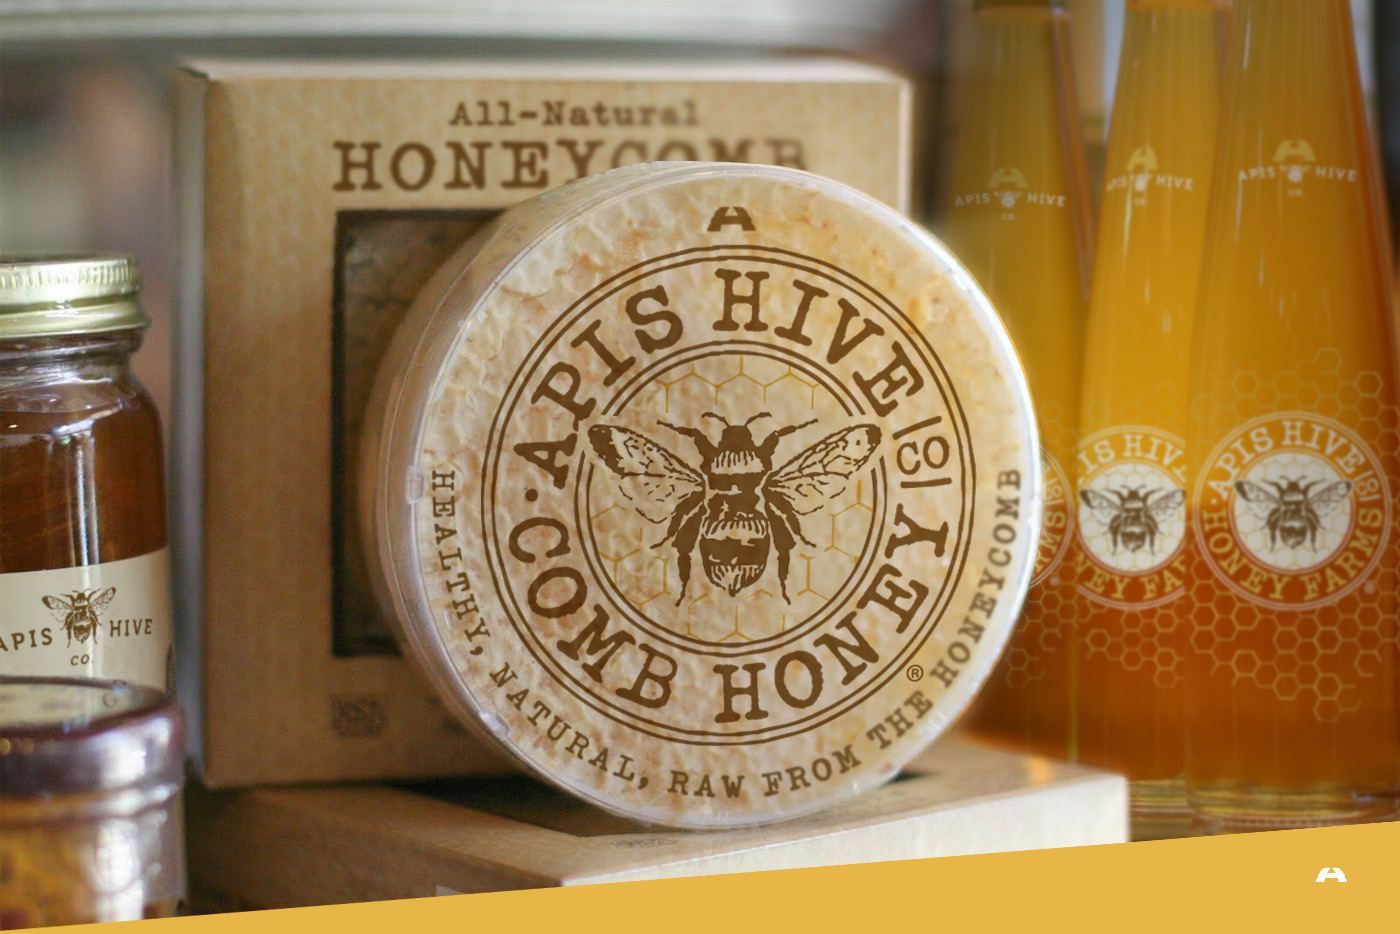 graphic design logo Salt lake city Colorado utah brand honey bee Pollen nectar hive wax